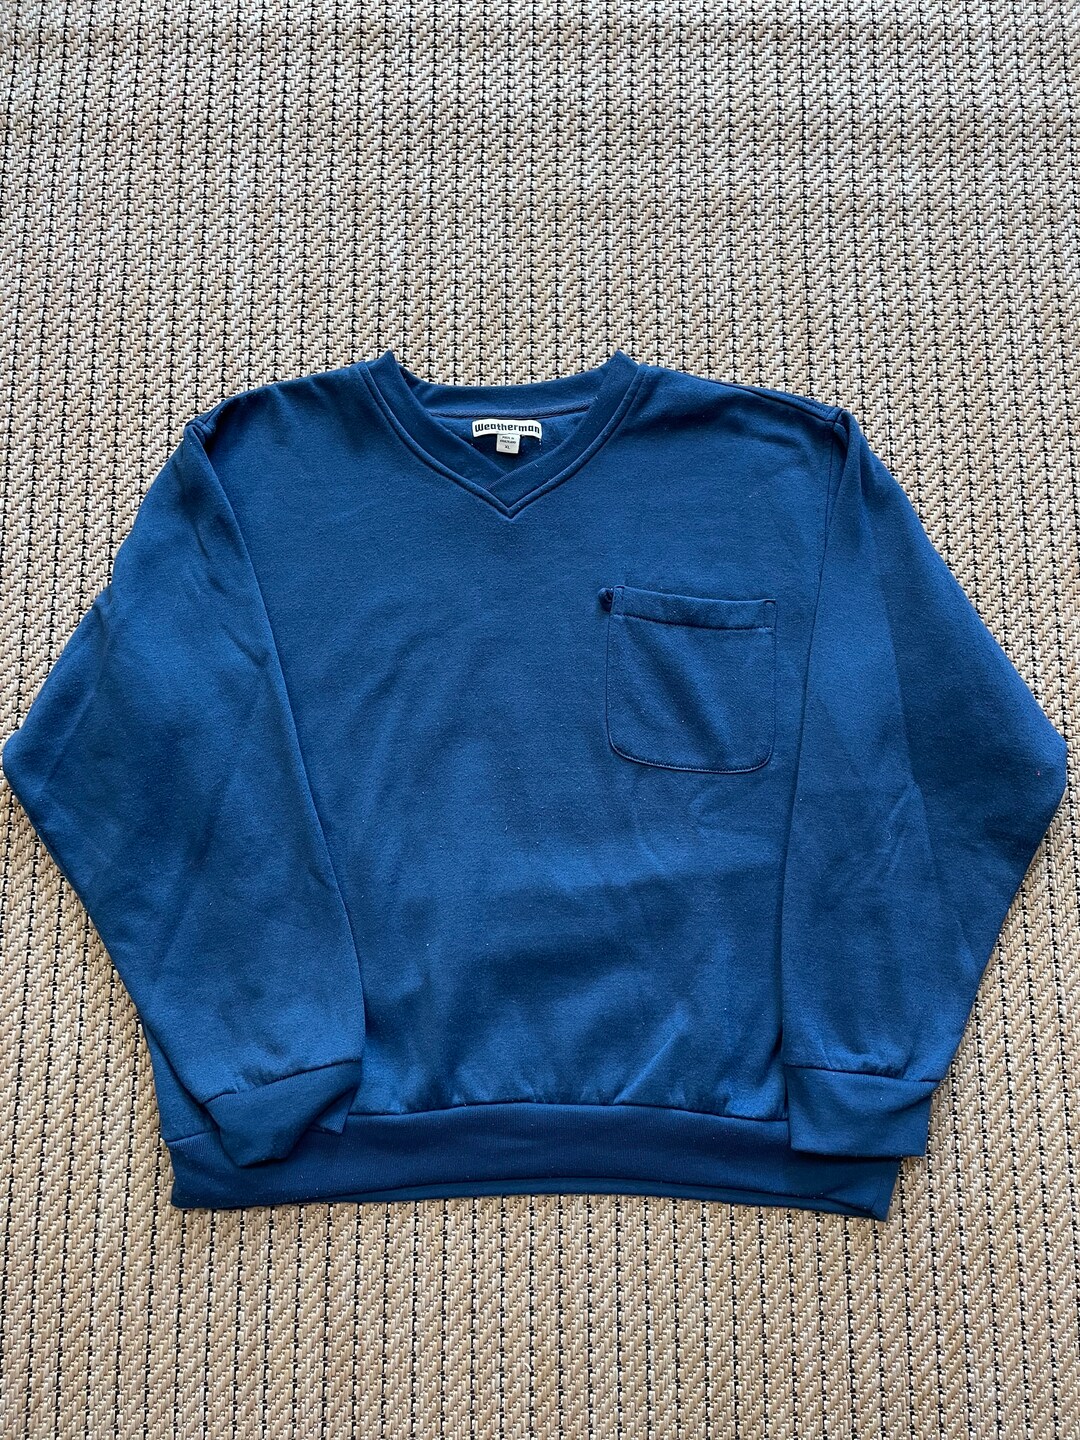 Vintage Weatherman Brand Pullover Sweatshirt Size XL - Etsy